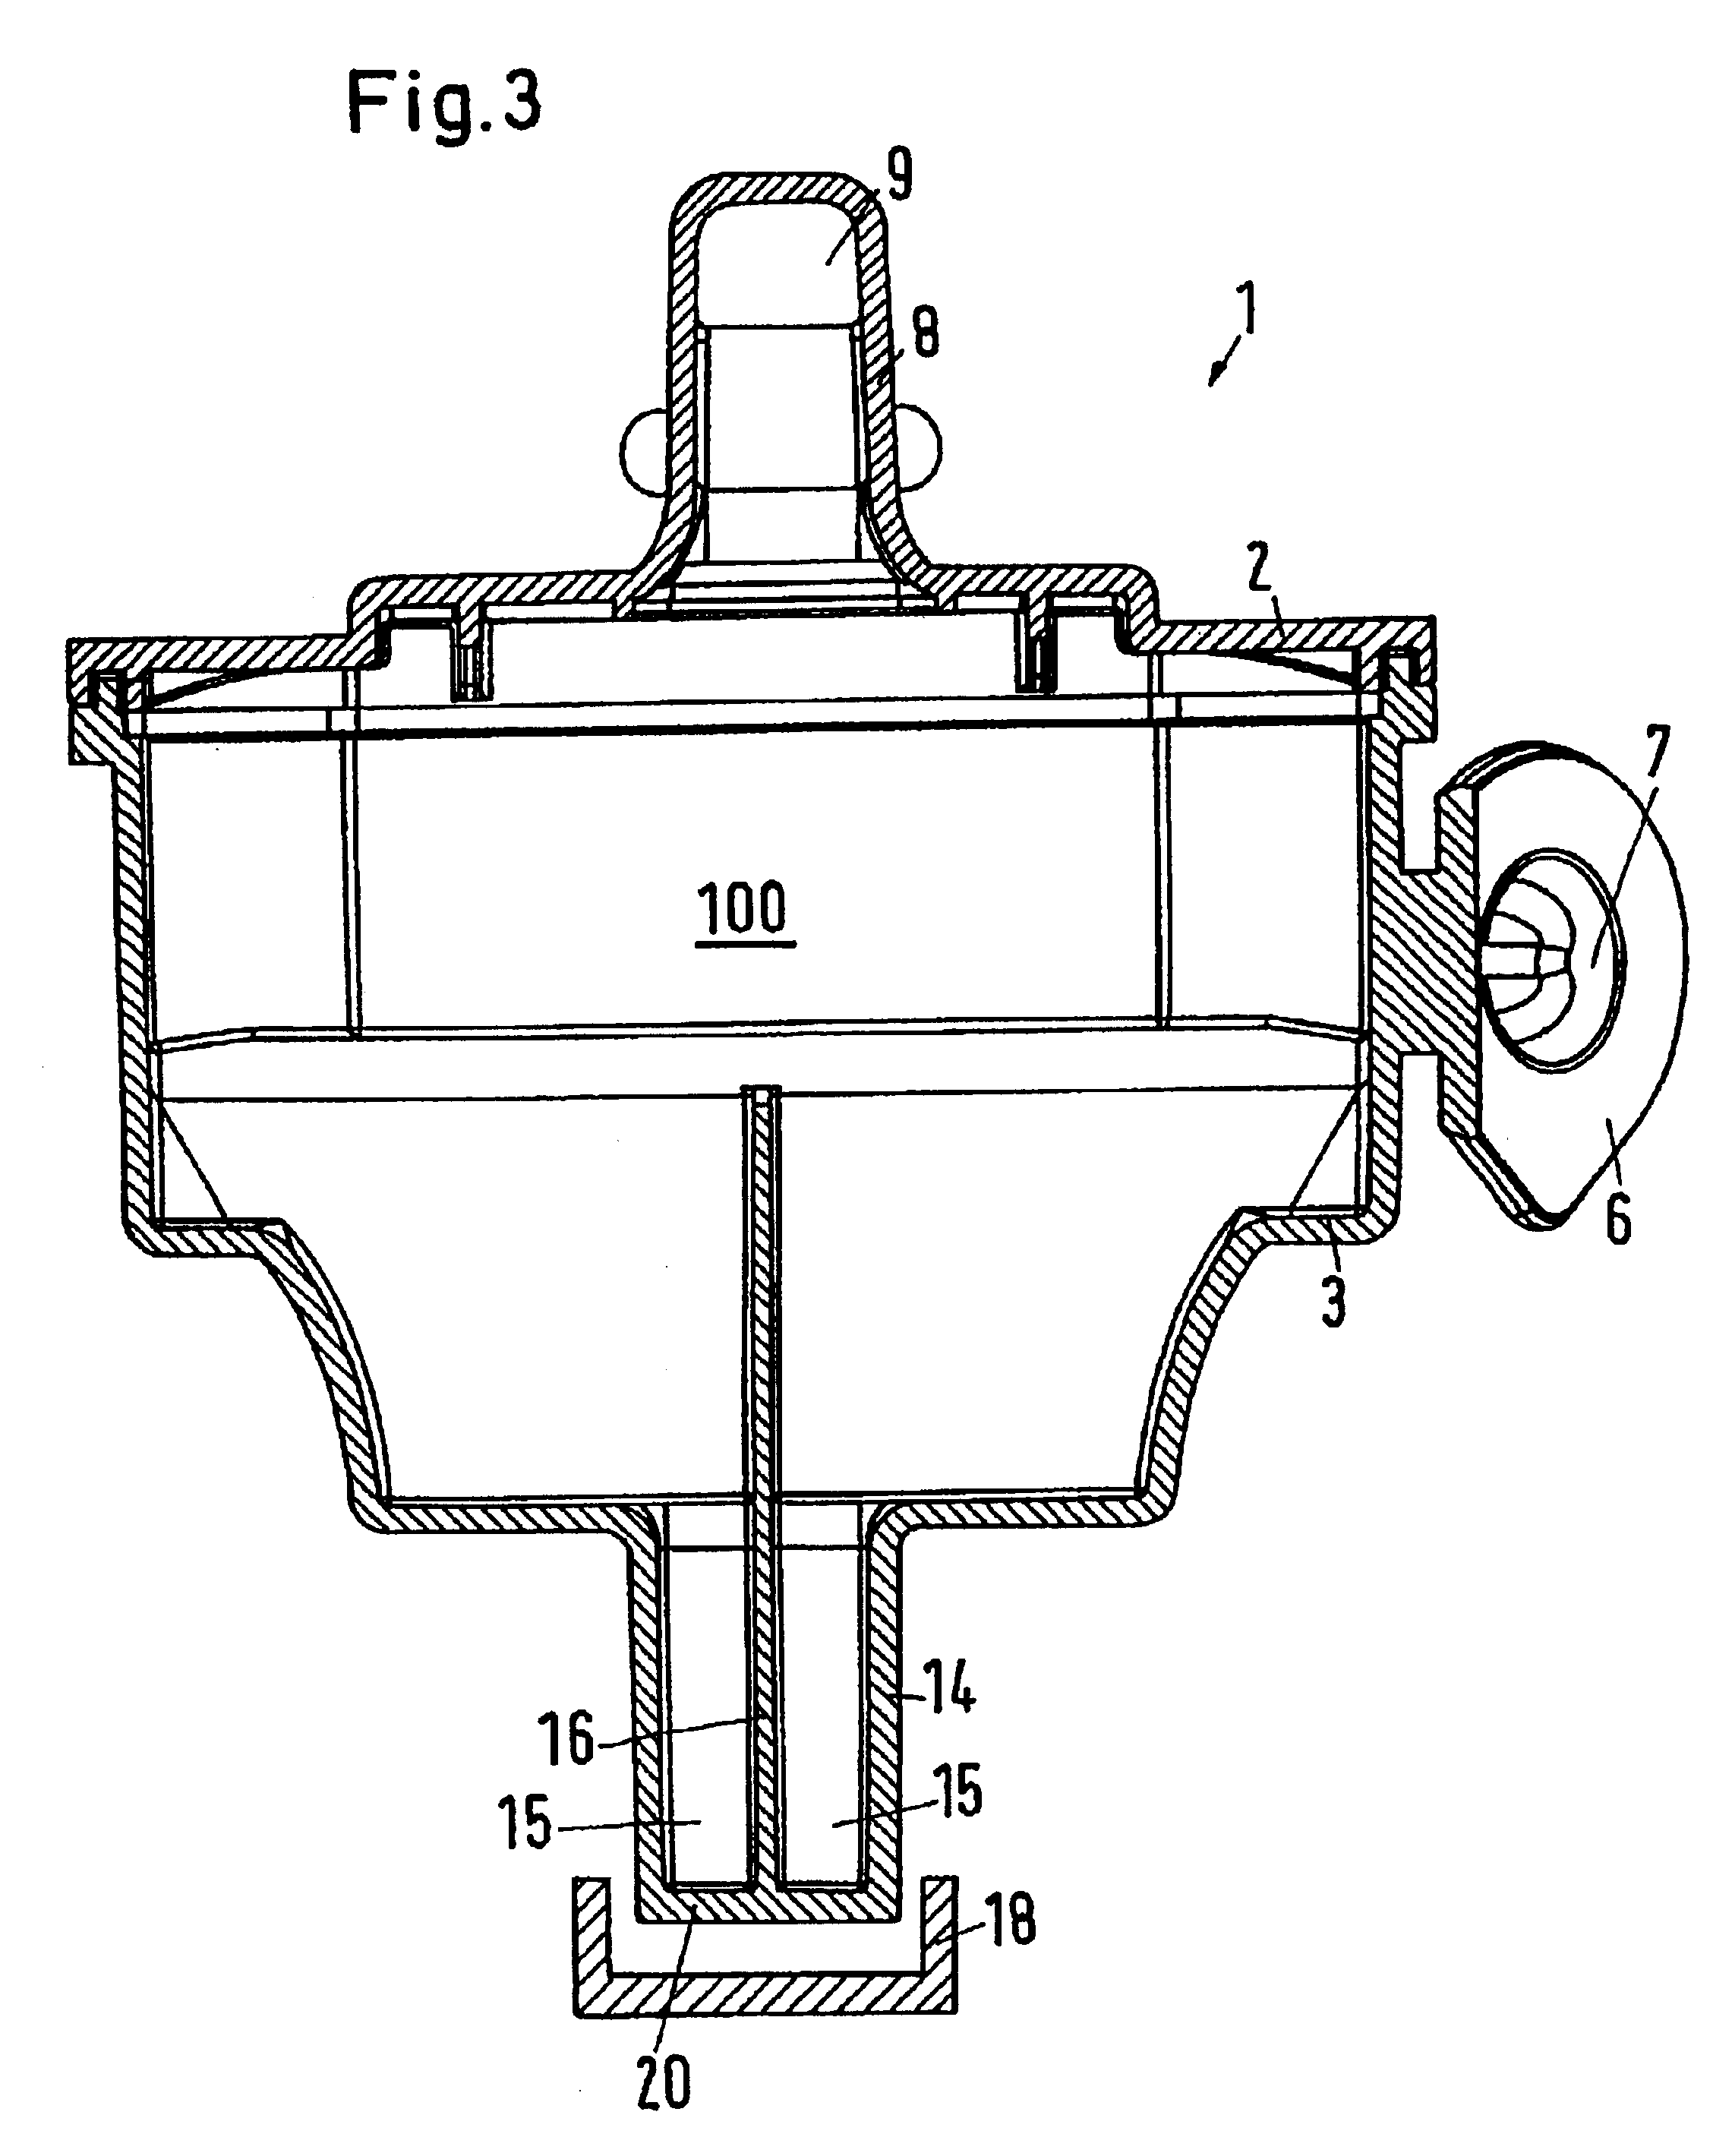 Suction muffler for a refrigerating machine